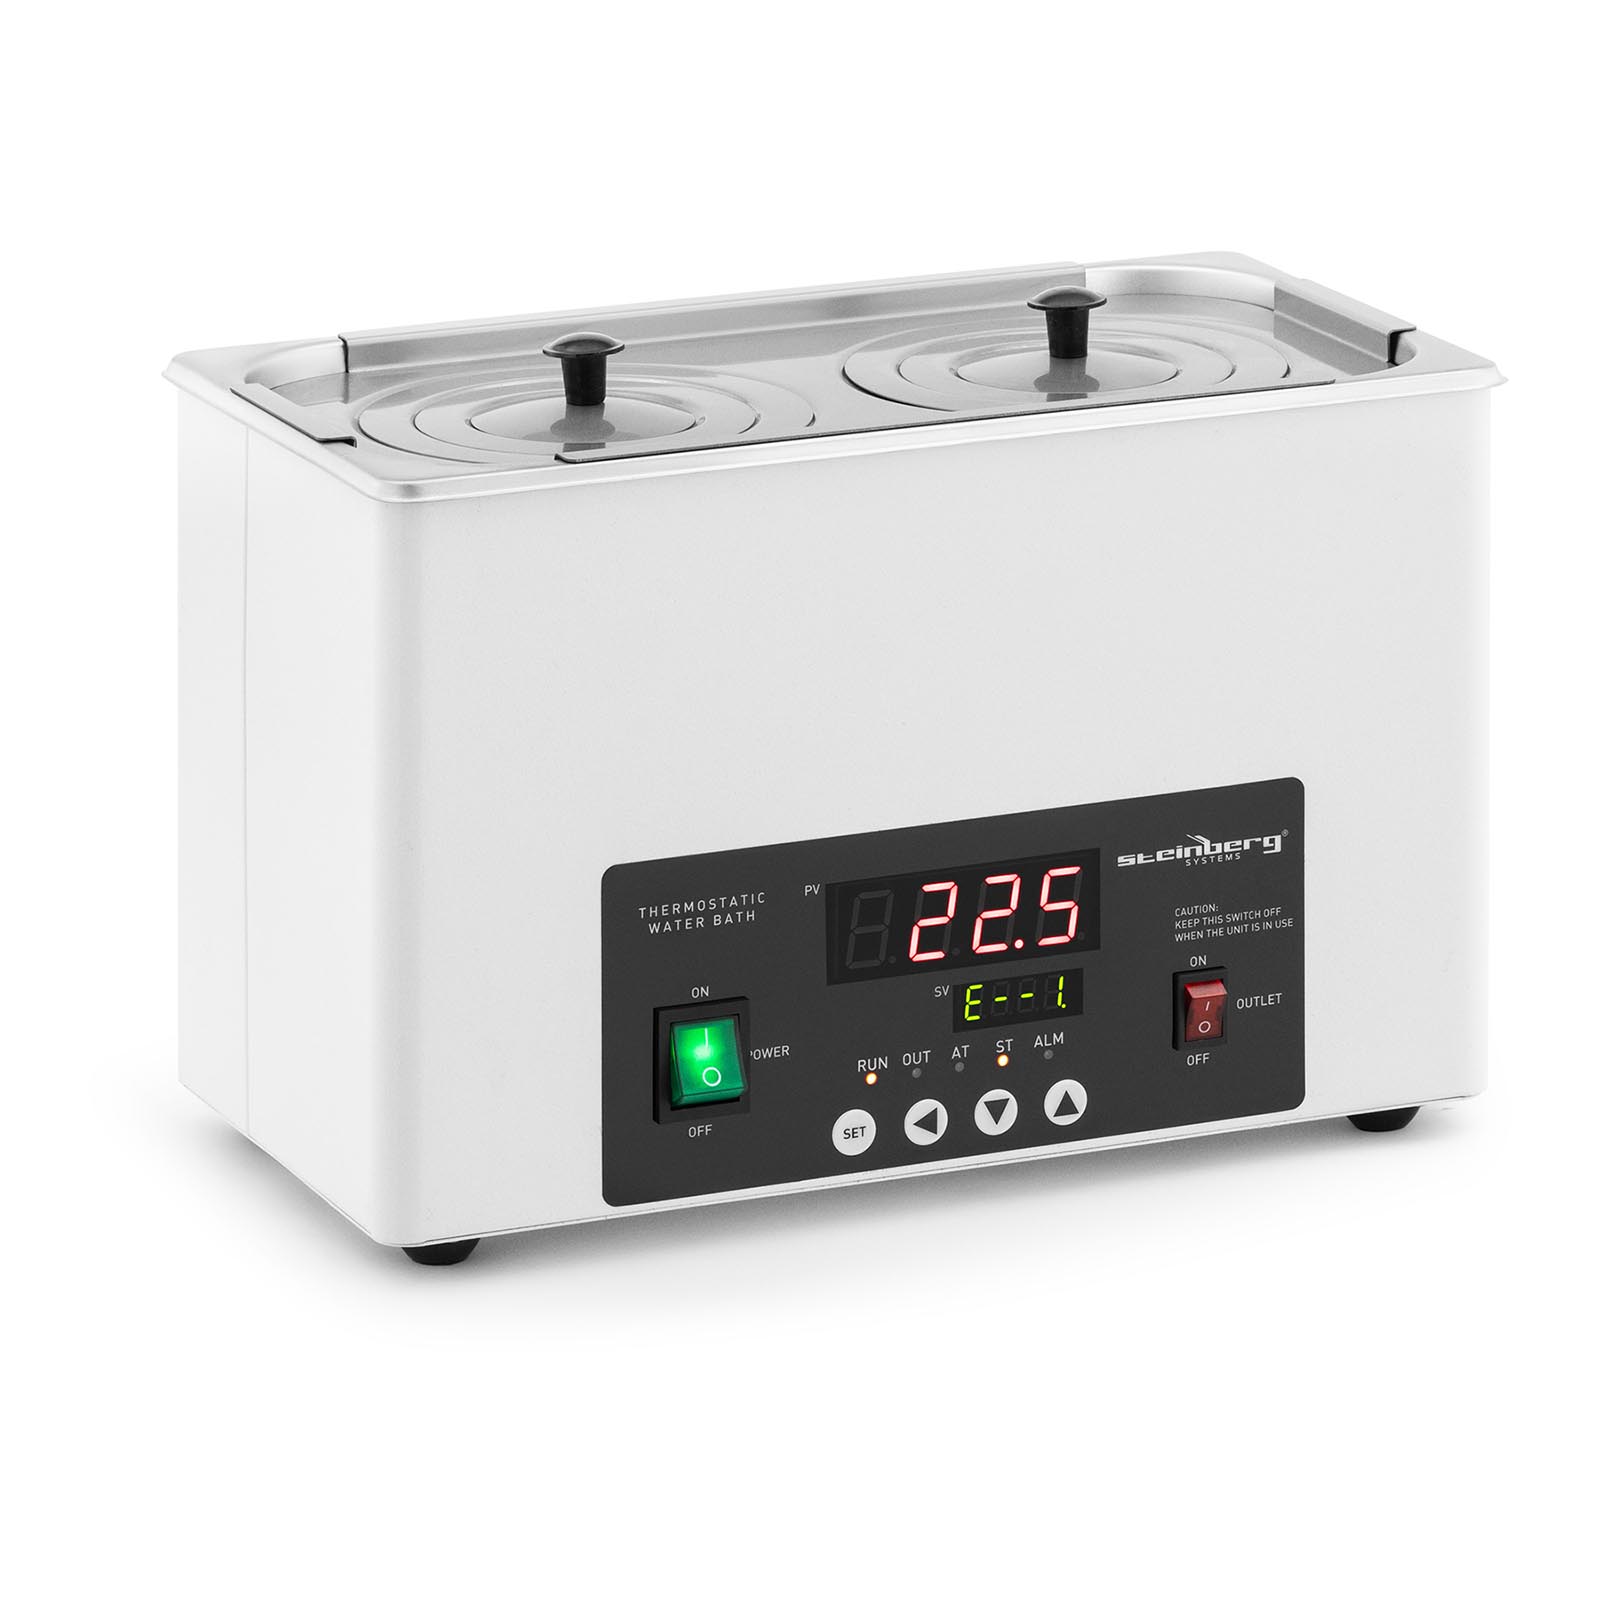 Baño termostatico - digital - 6,1 L - 5 - 100 °C - 300 x 150 x 150 mm